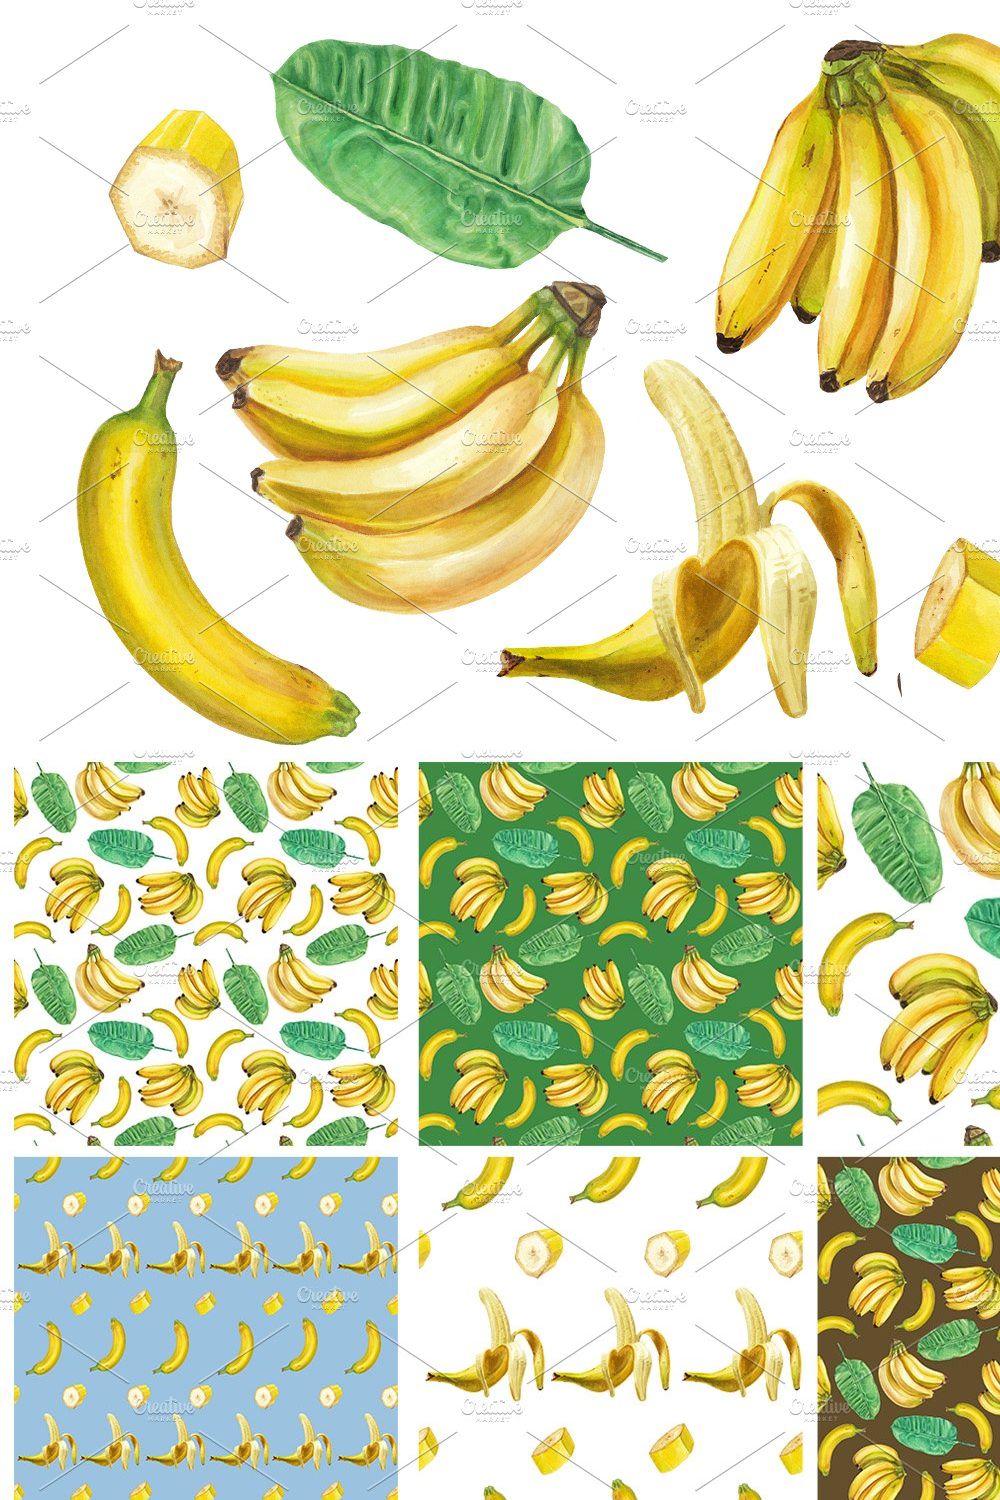 Watercolor banana set pinterest preview image.